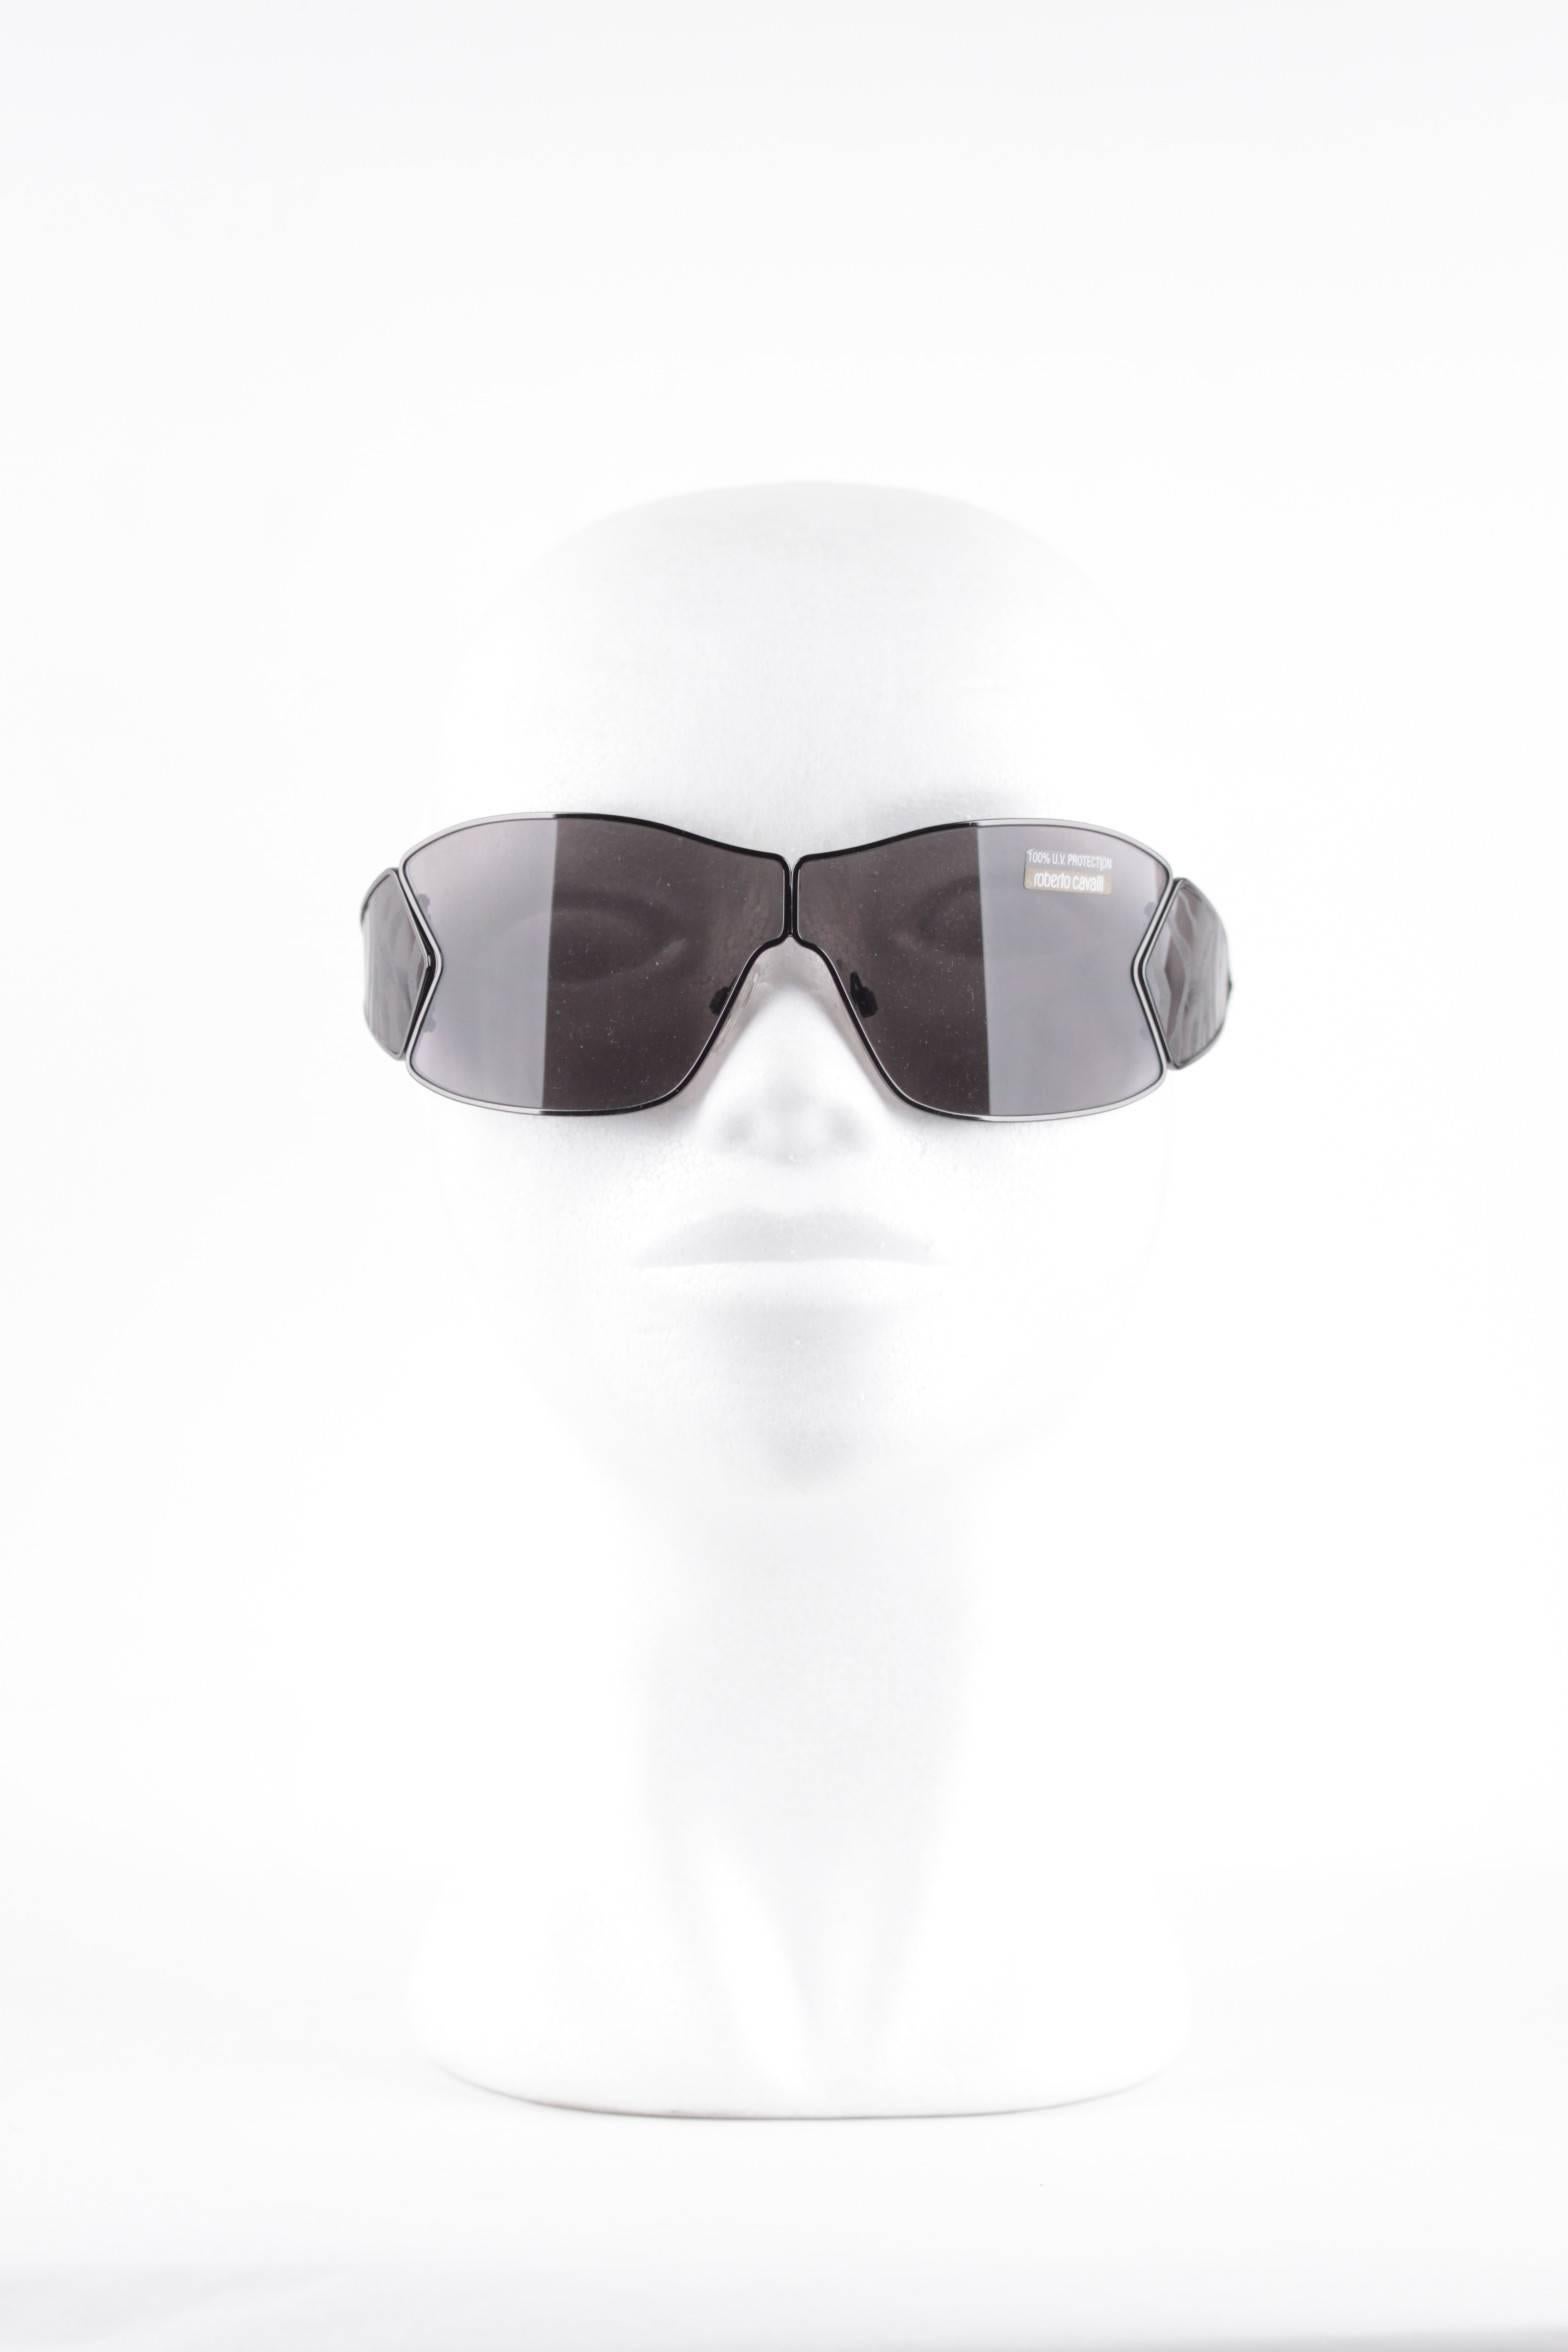 Gray ROBERTO CAVALLI Sunglasses Mod. ARACNE 218 S 223 70/1 130 Gunmetal WRAP Style